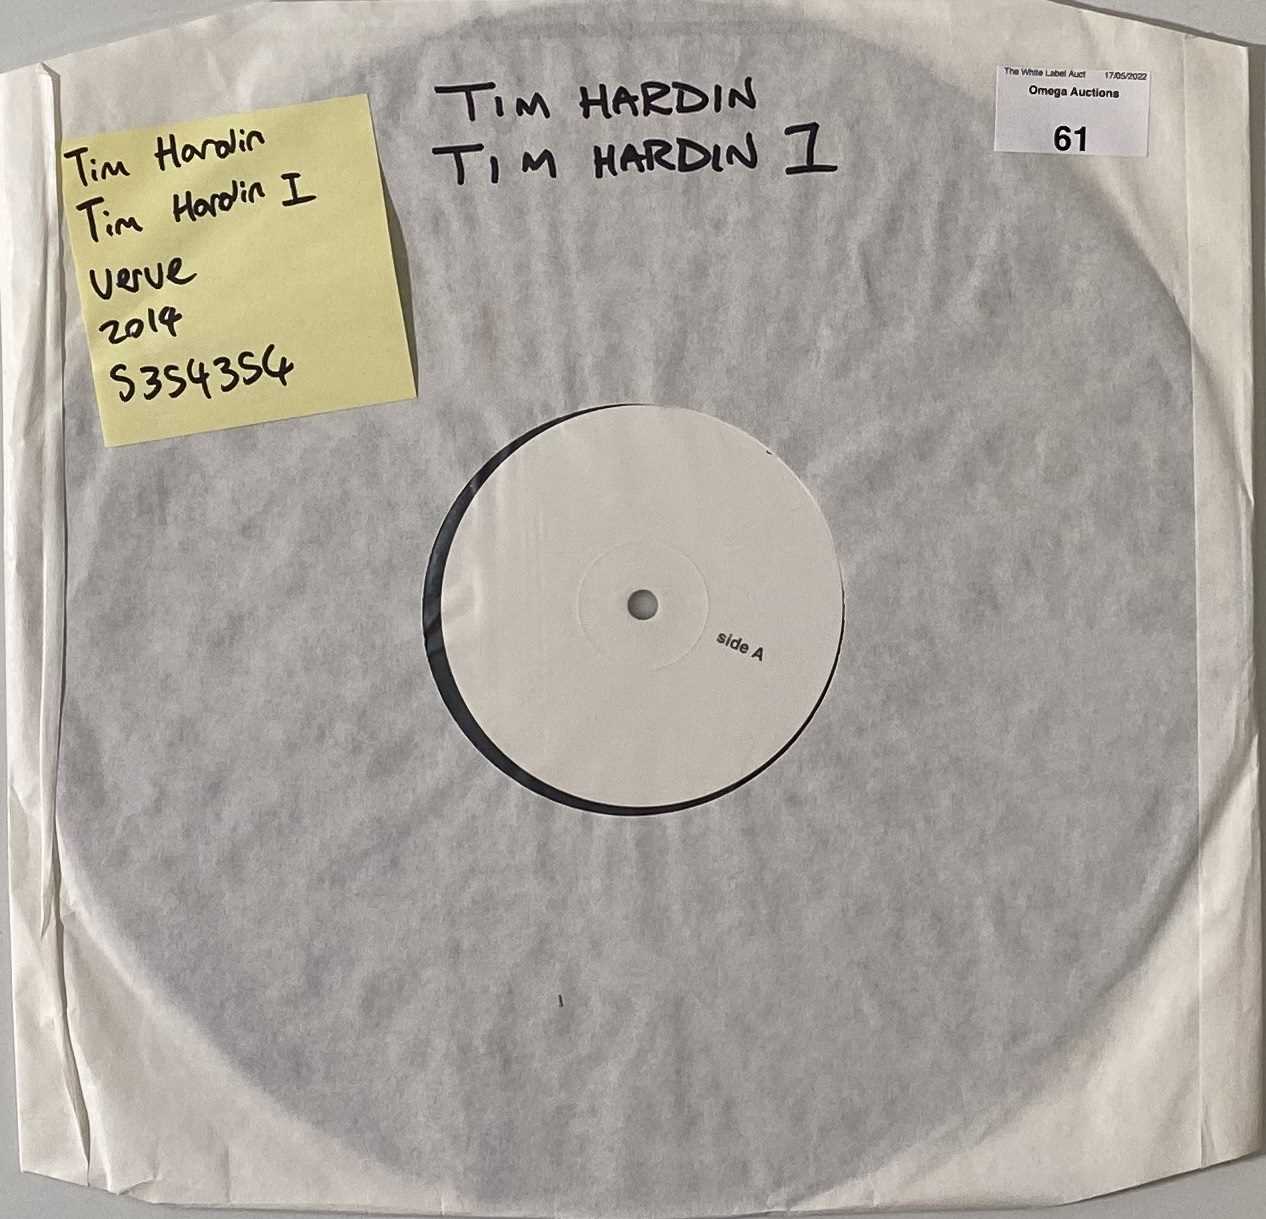 Lot 61 - TIM HARDIN - TIM HARDIN 1 LP (2014 - VERVE 5354354)